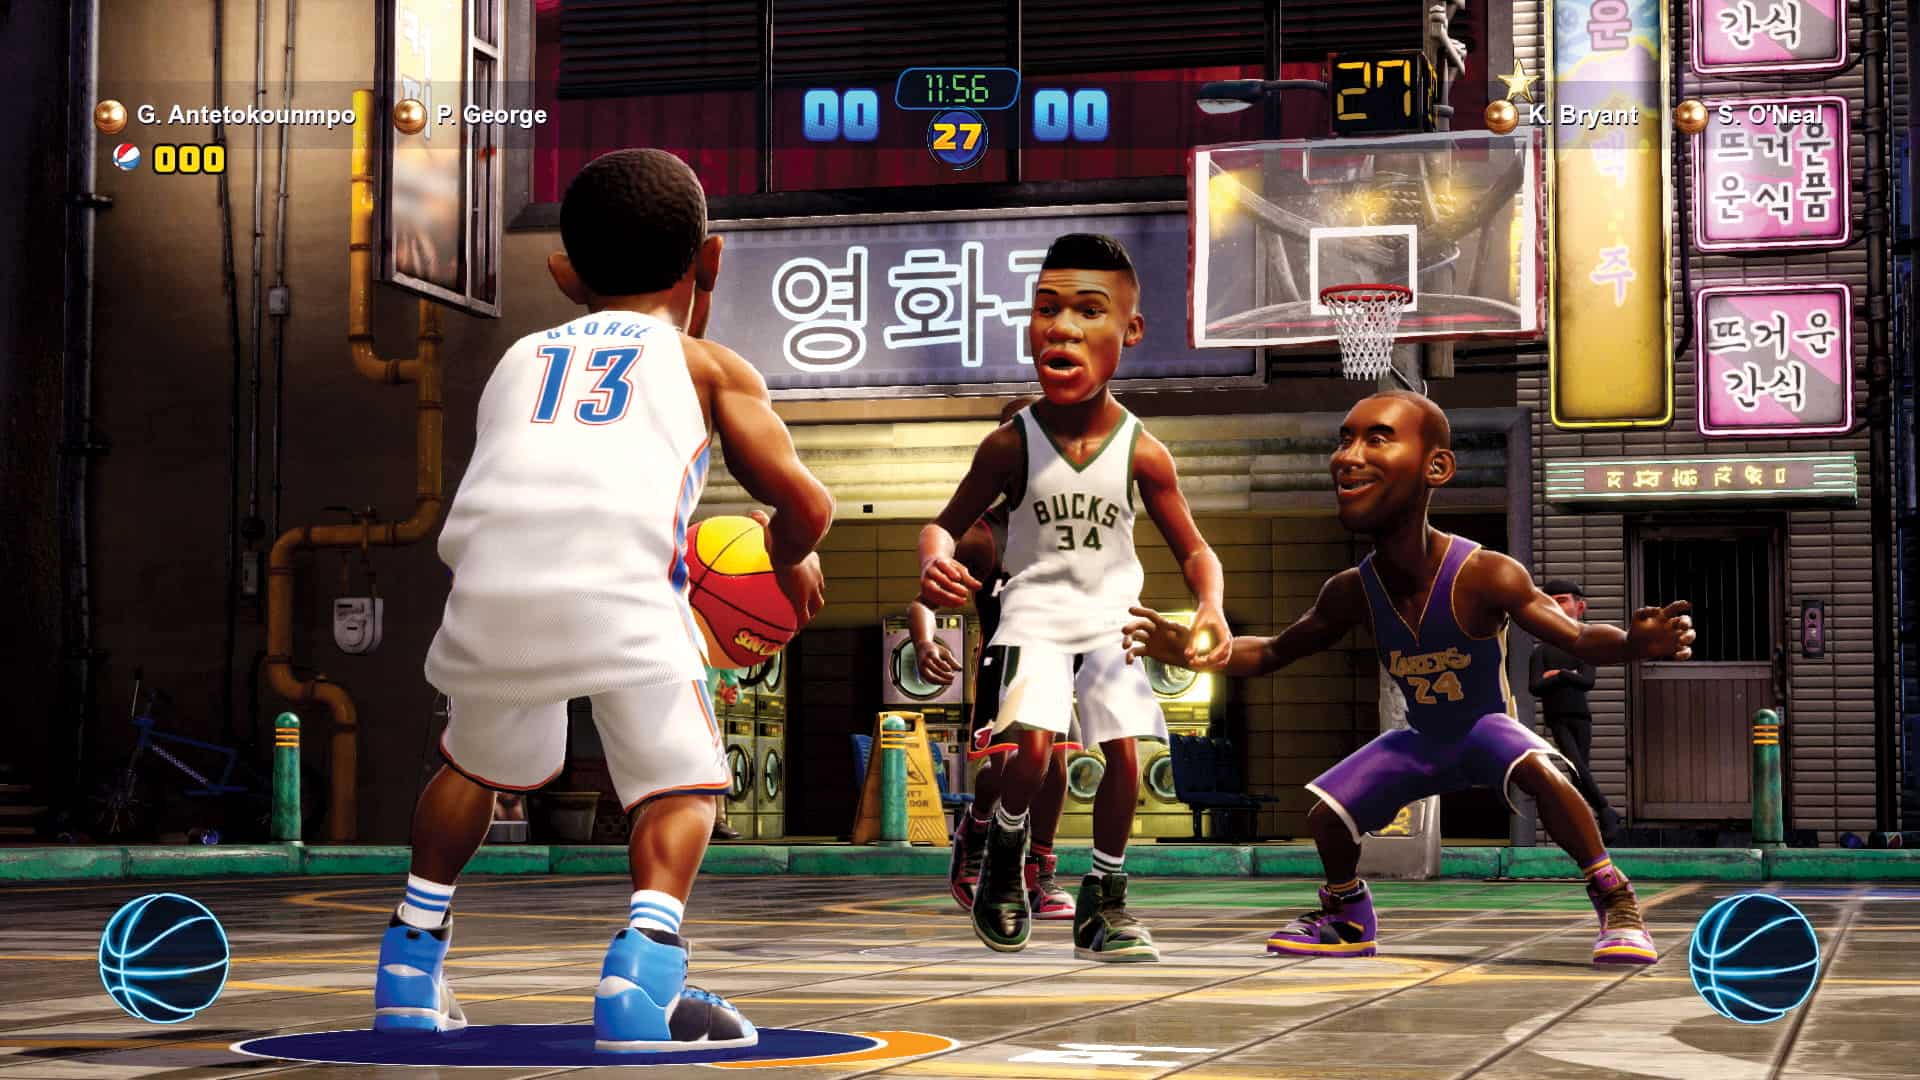 NBA 2K Playgrounds 2 Cuenta Compartida Xbox One Xbox Series